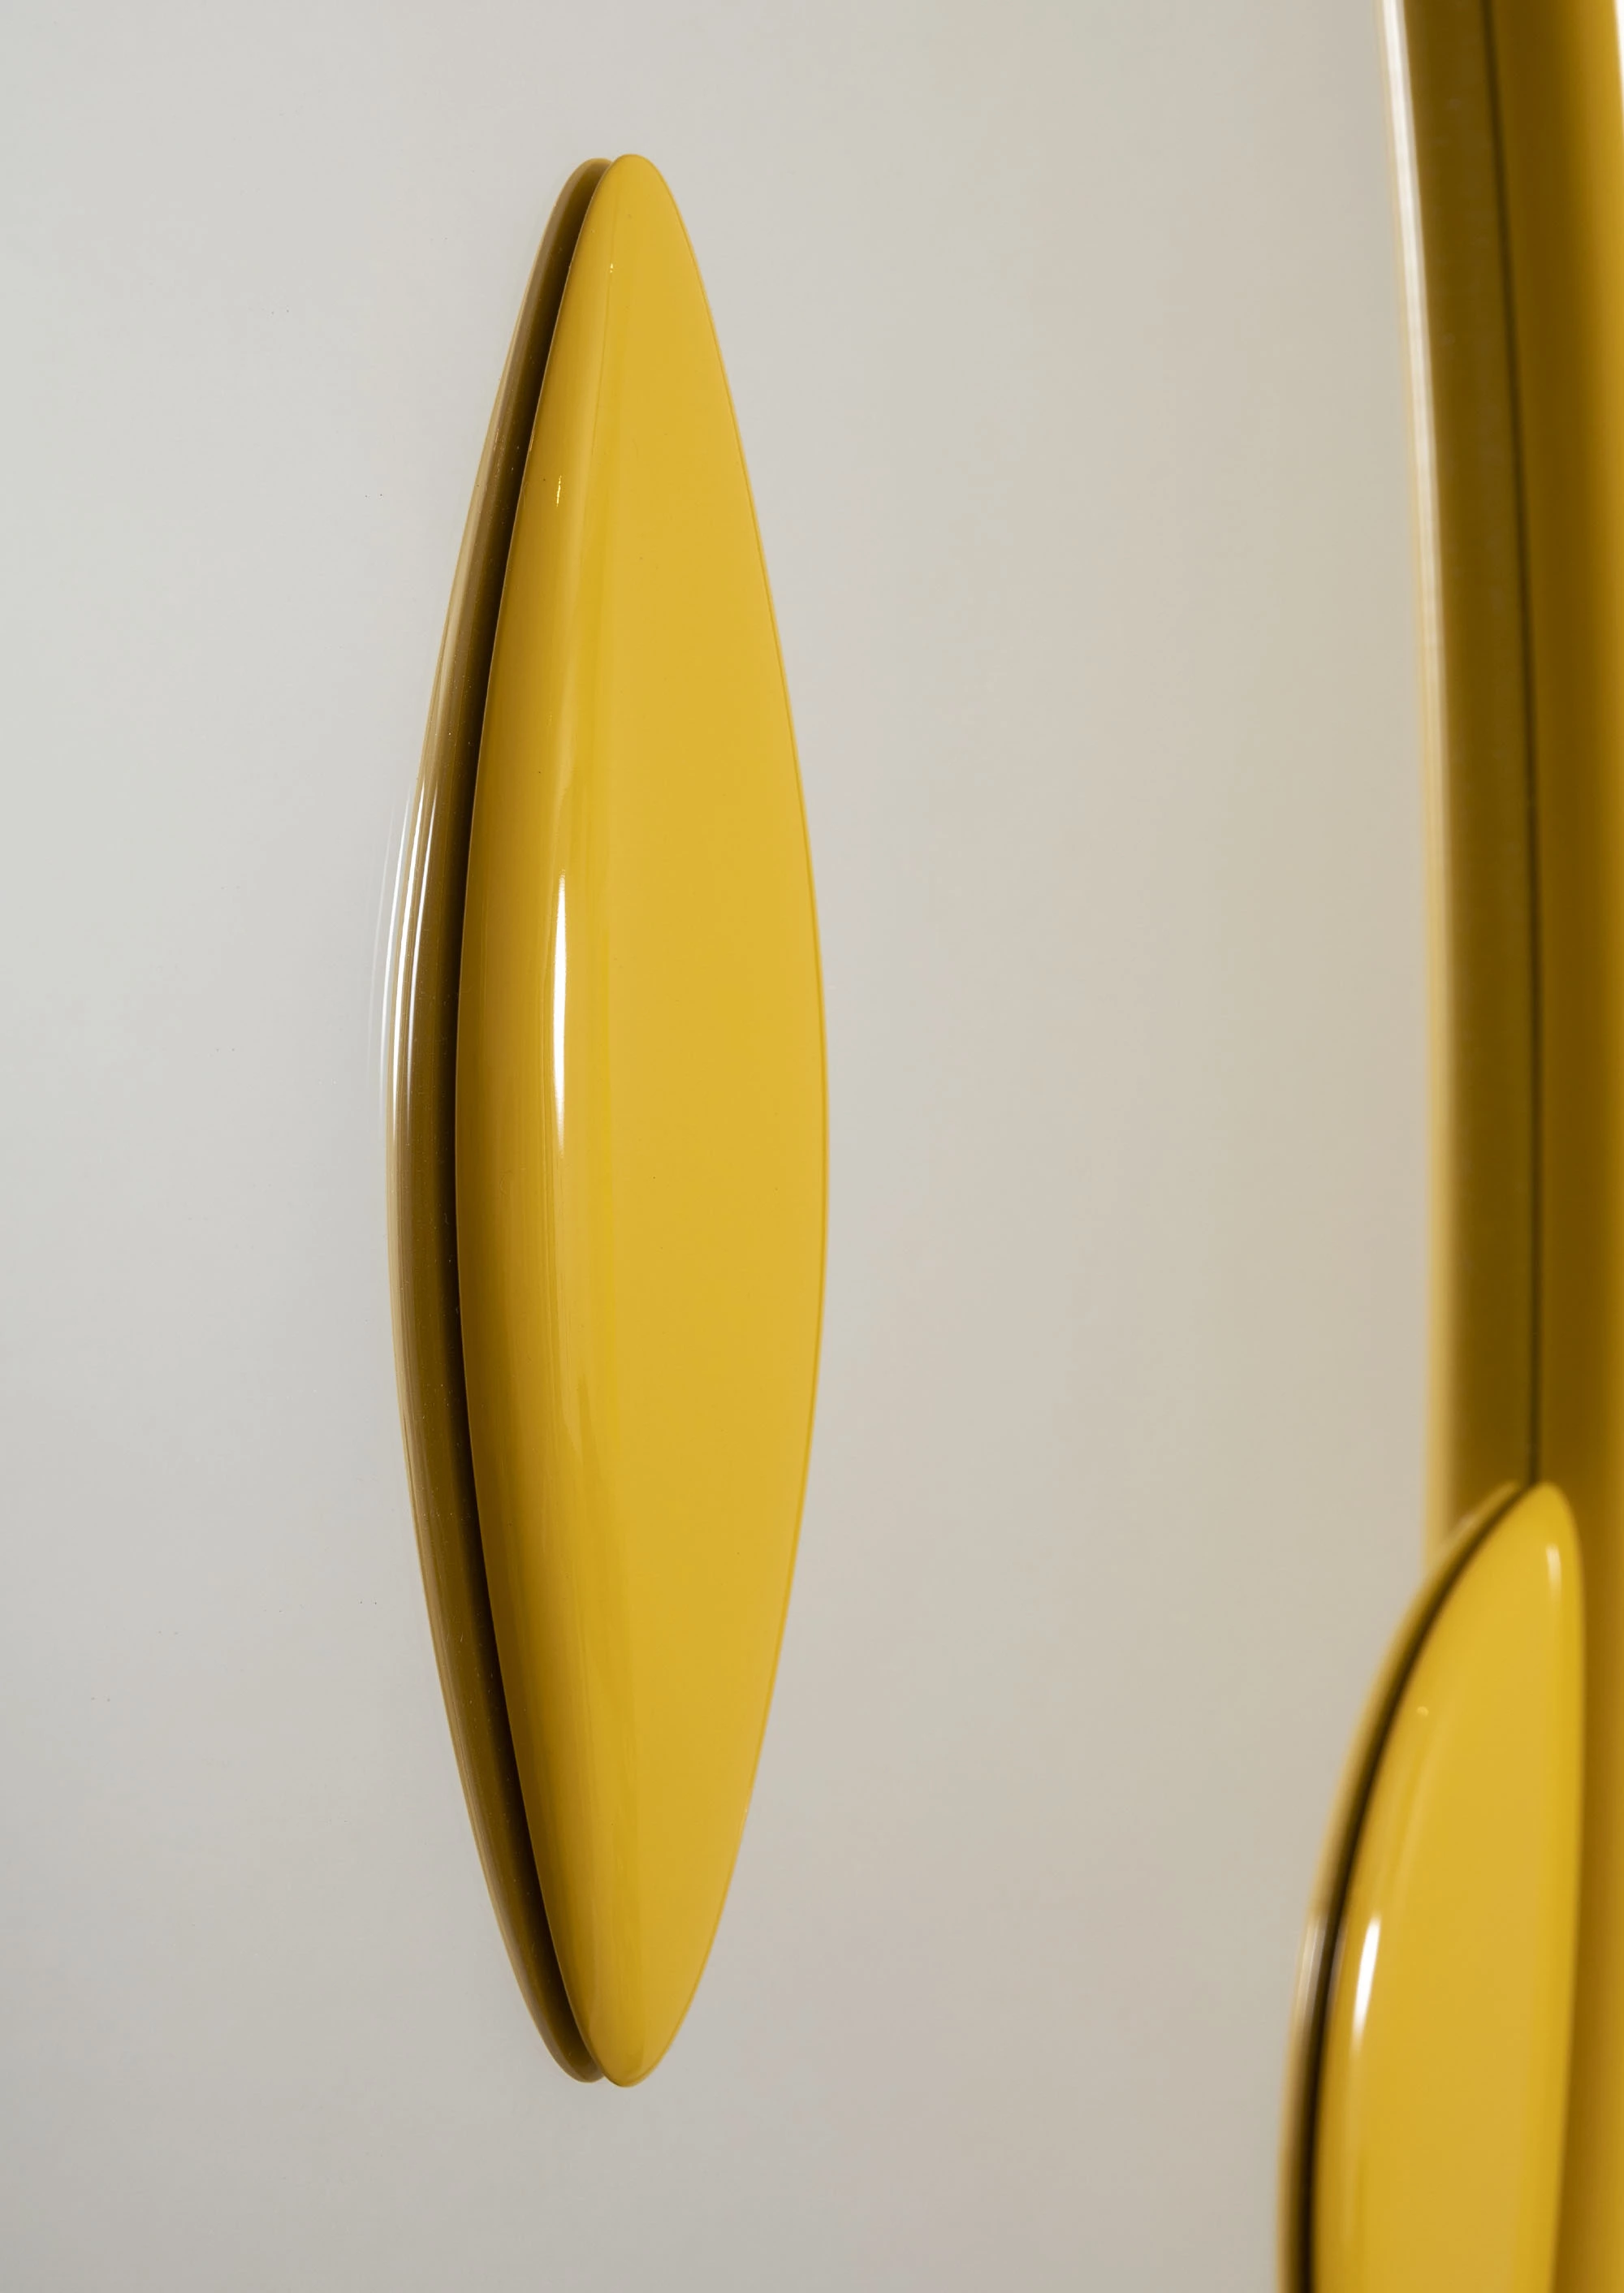 Cheeky Small Model - Jaime Hayon - Mirror - Galerie kreo